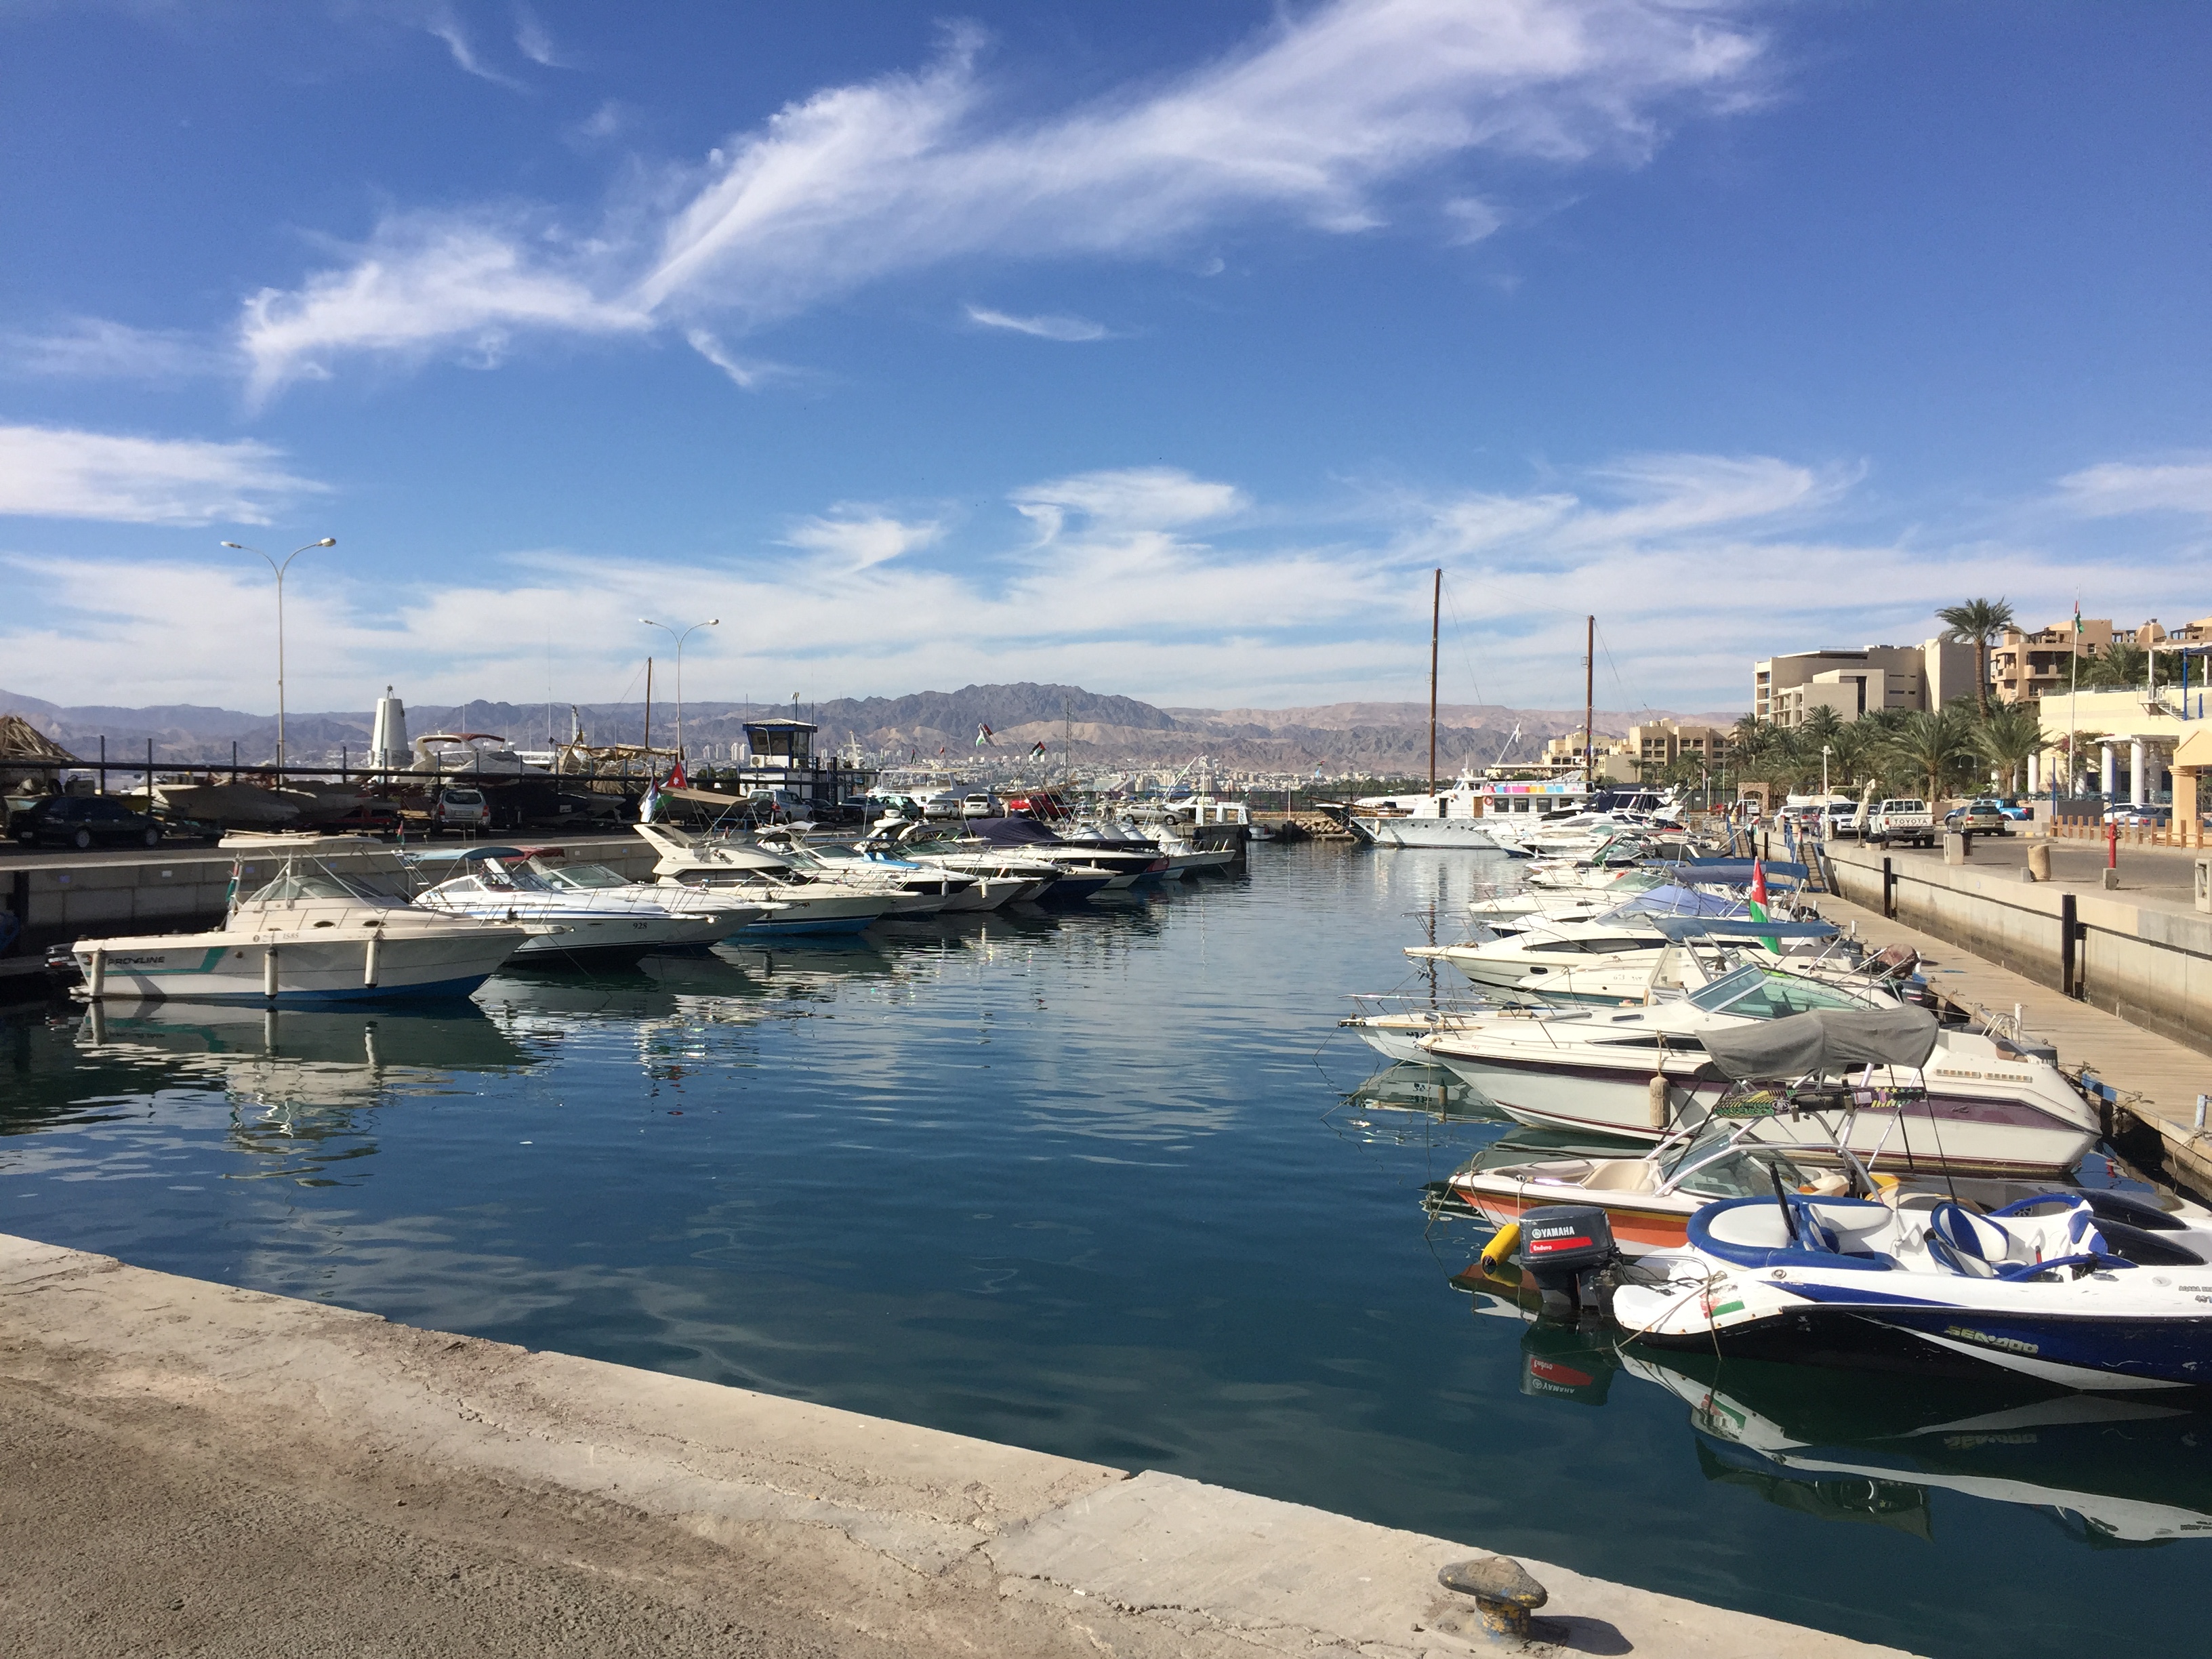 Boats in Aqaba's Marina